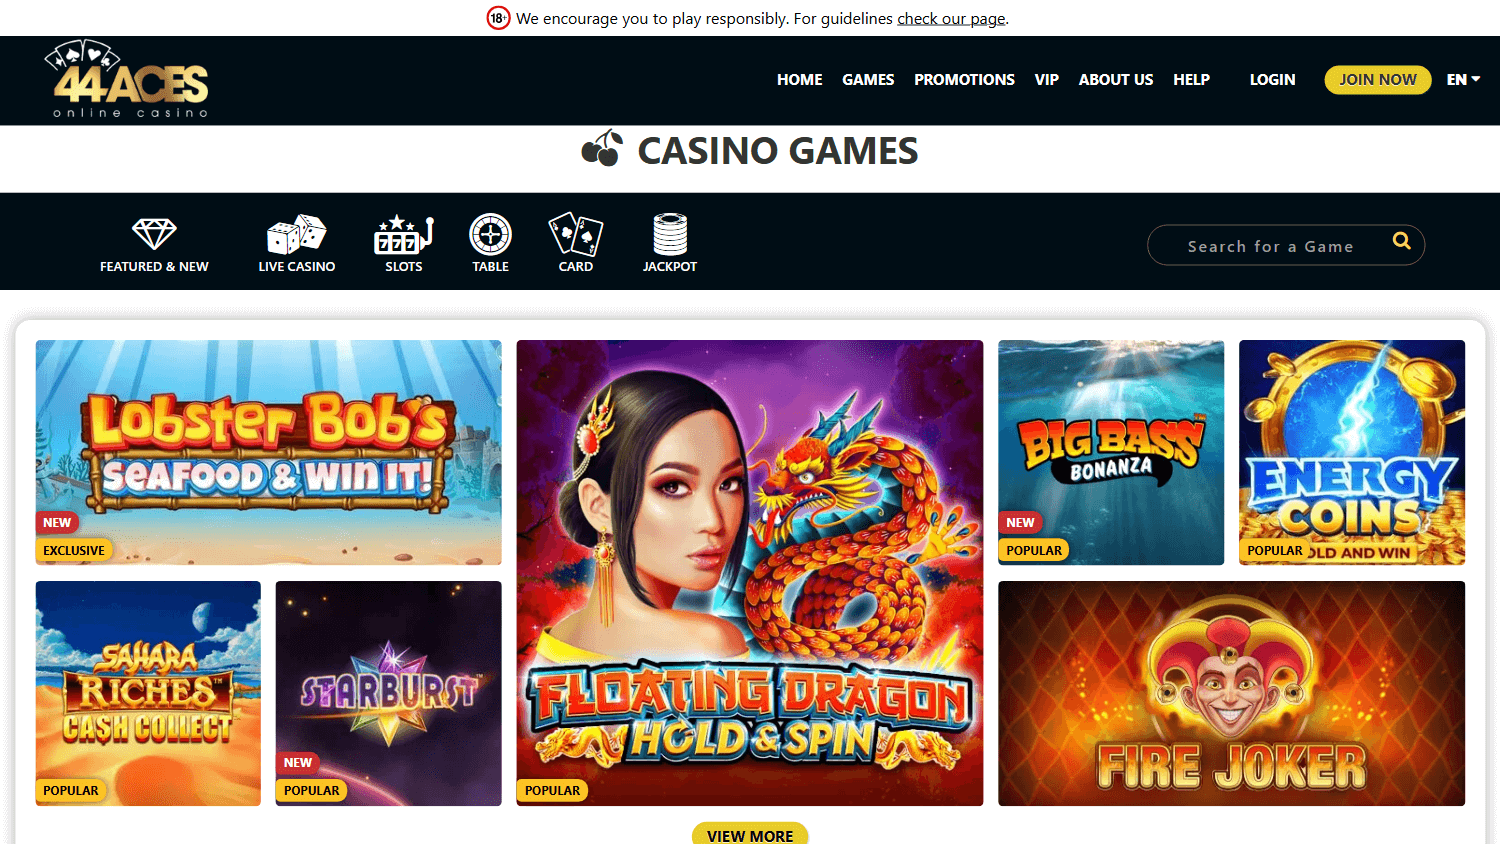 44aces_casino_game_gallery_desktop